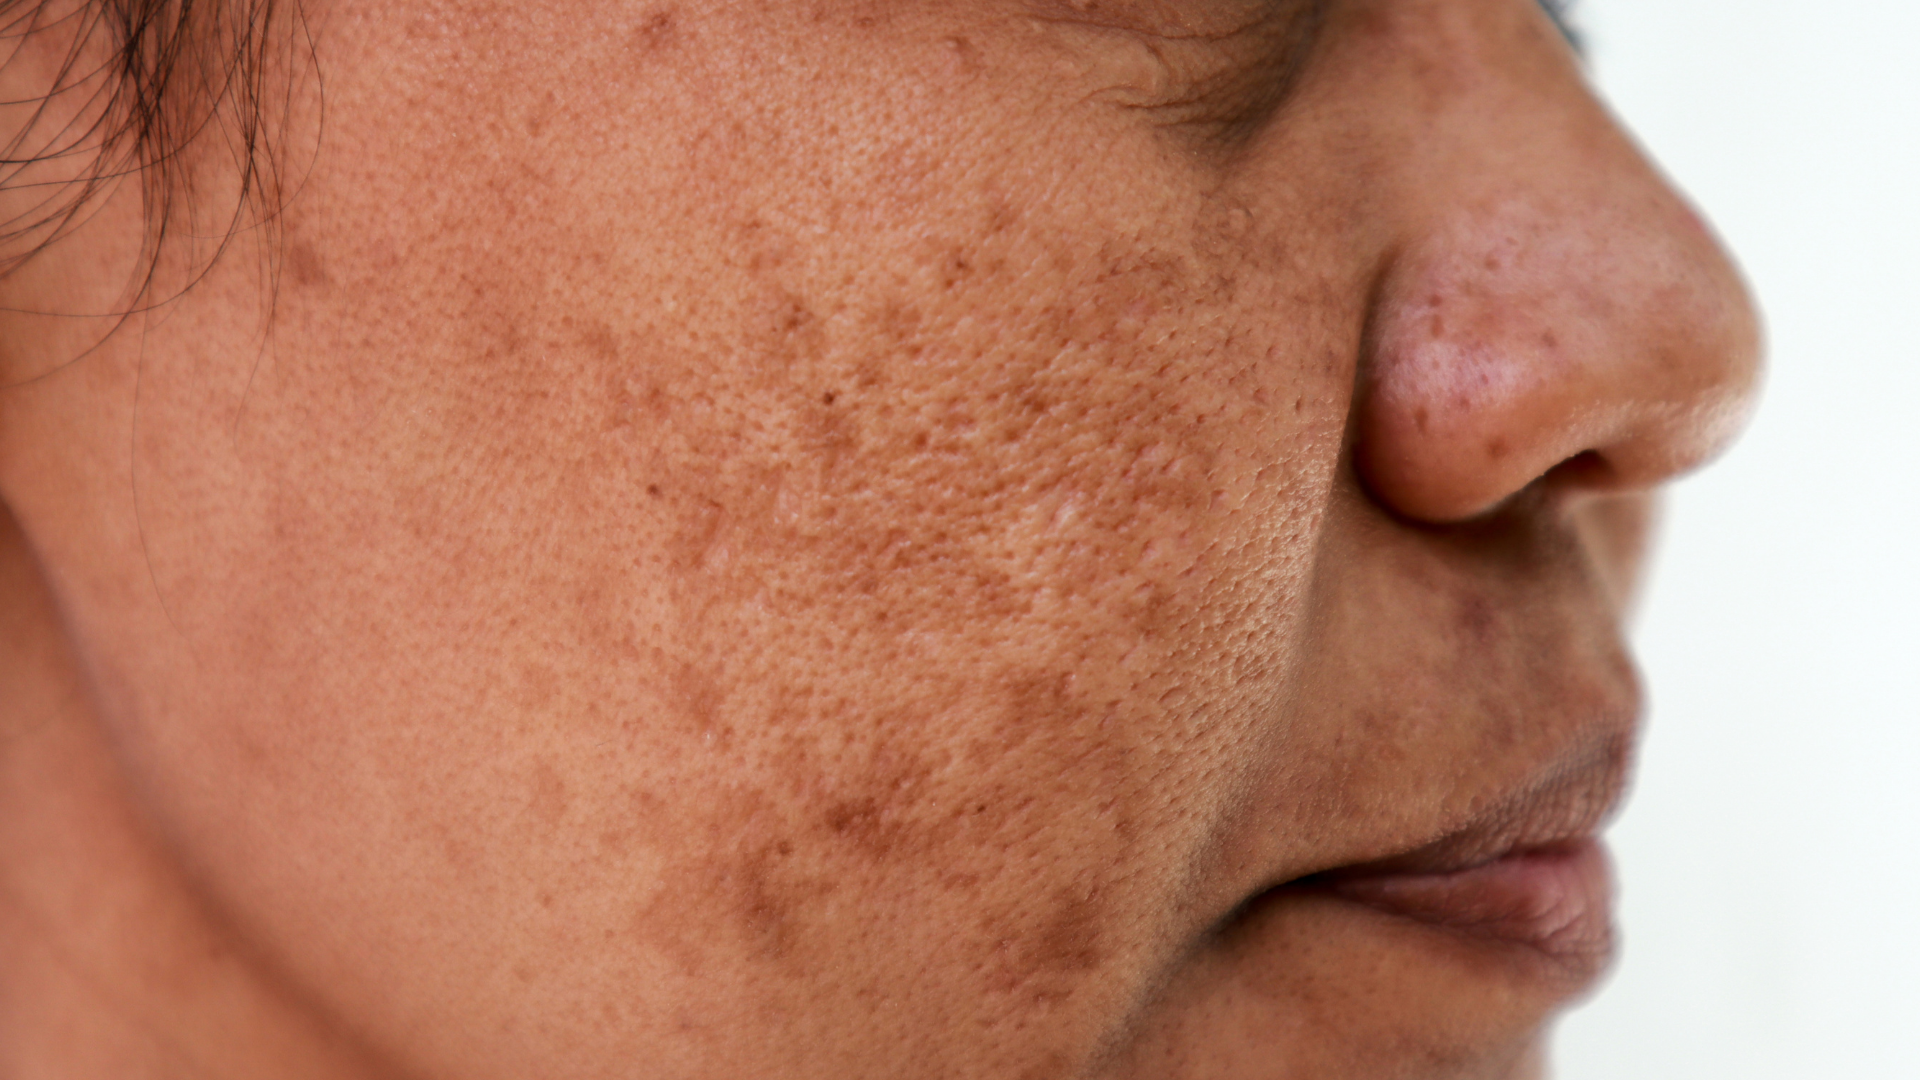 Treating melasma correctly - finally a remedy for dark pigmentation spots